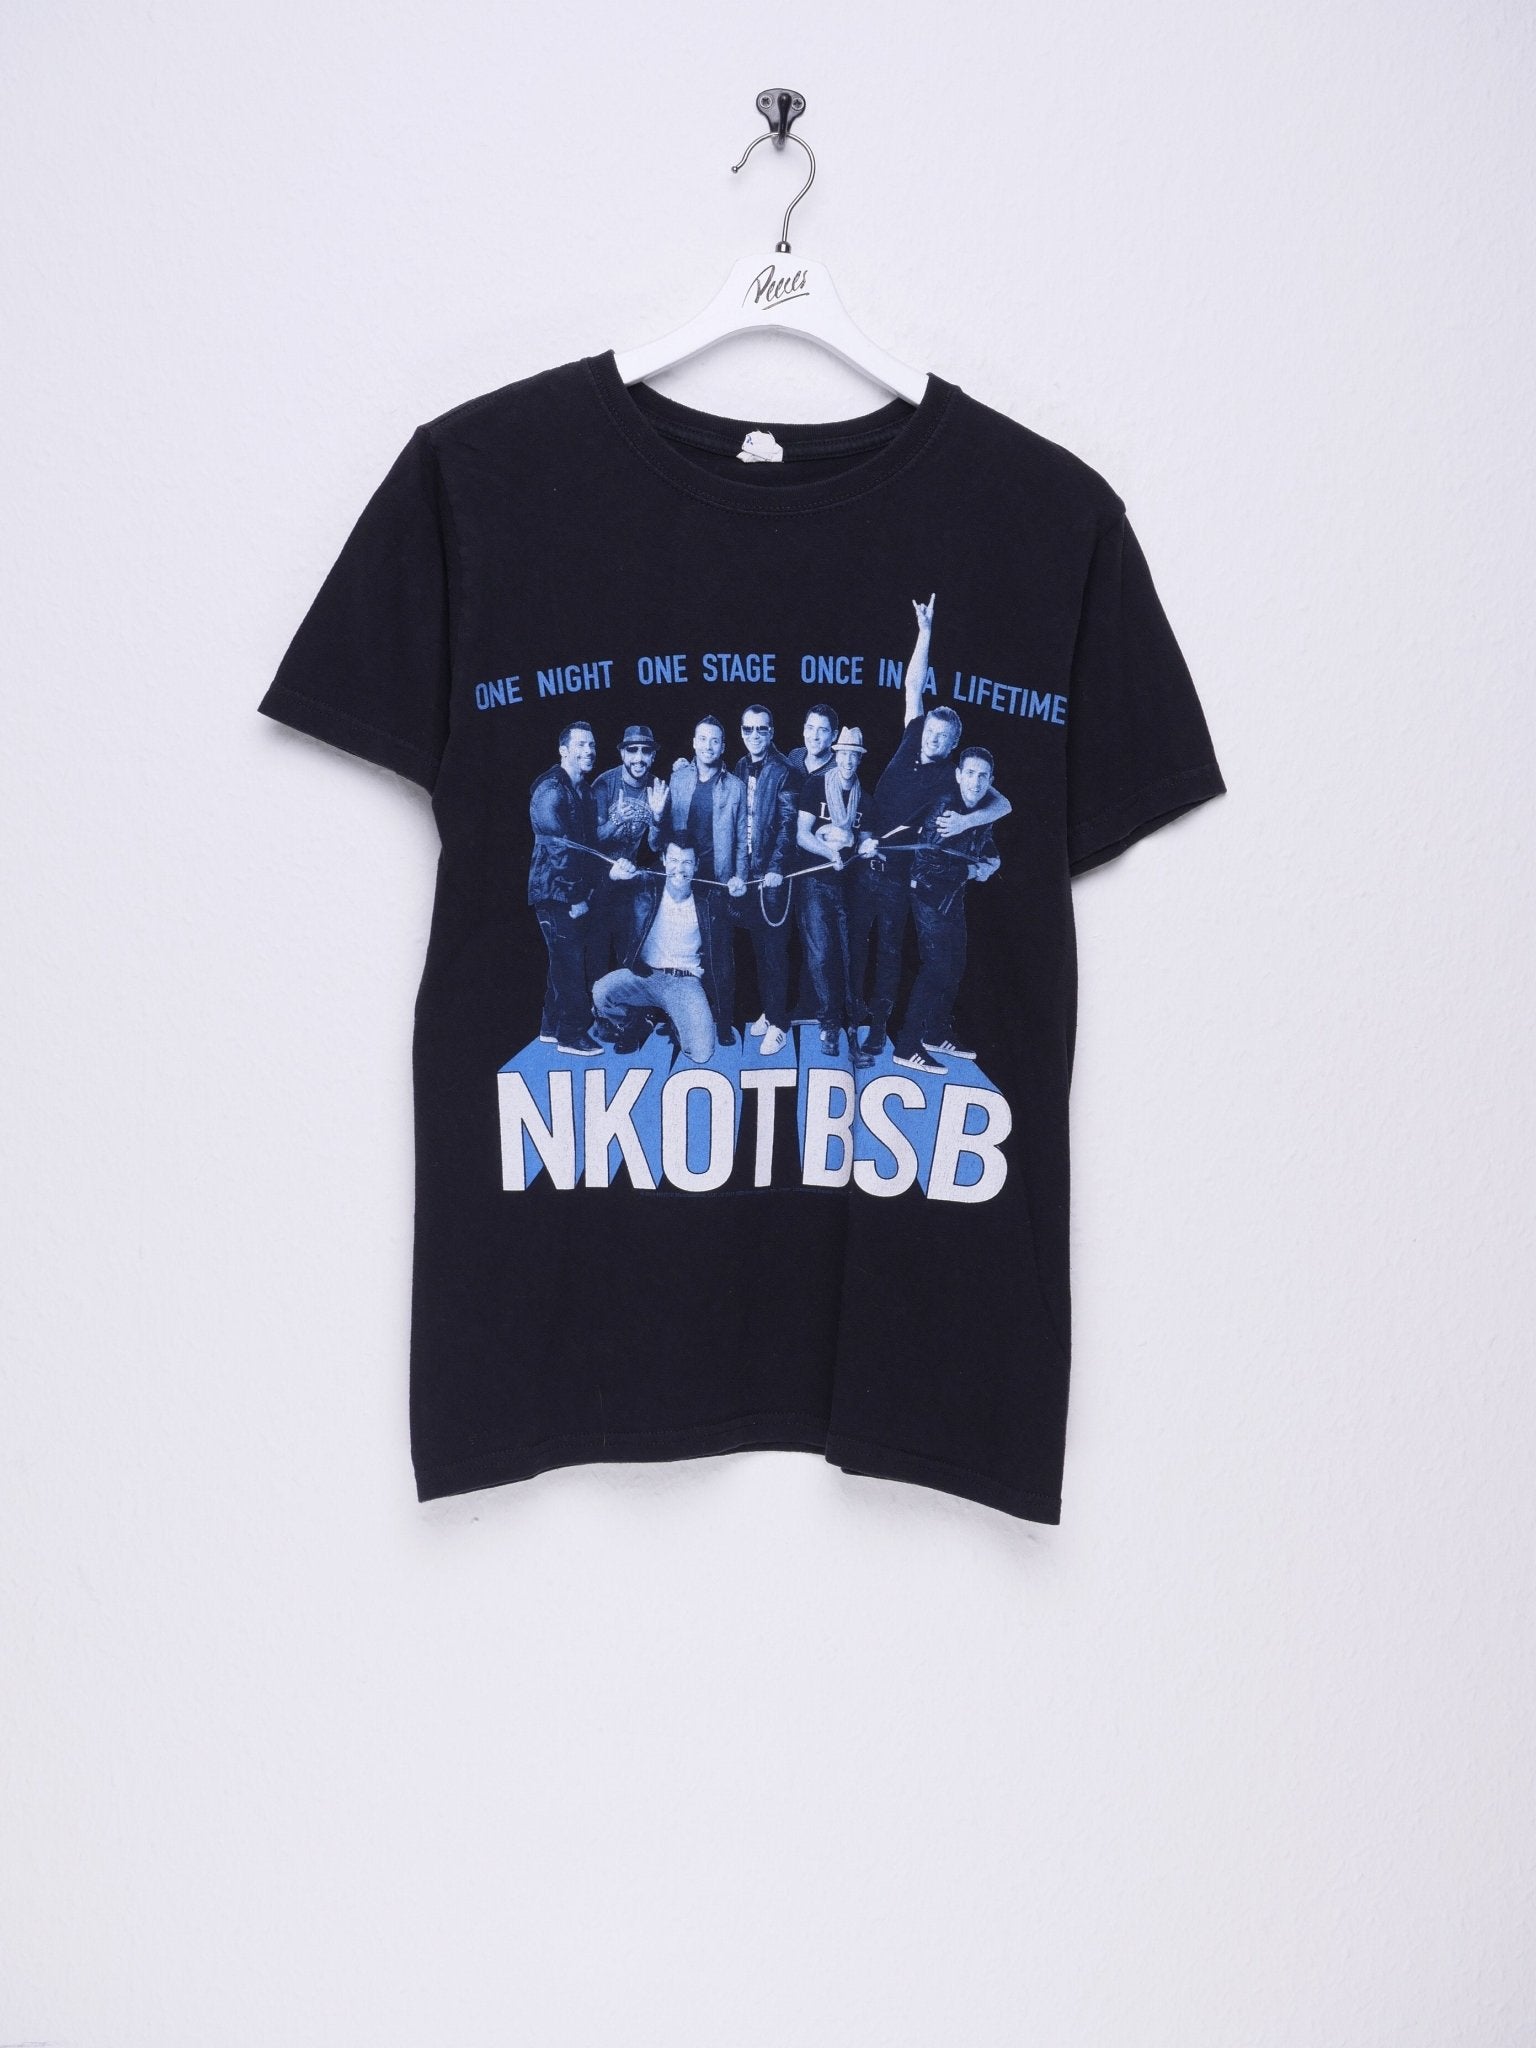 'NKOTBSB' printed Graphic black Shirt - Peeces